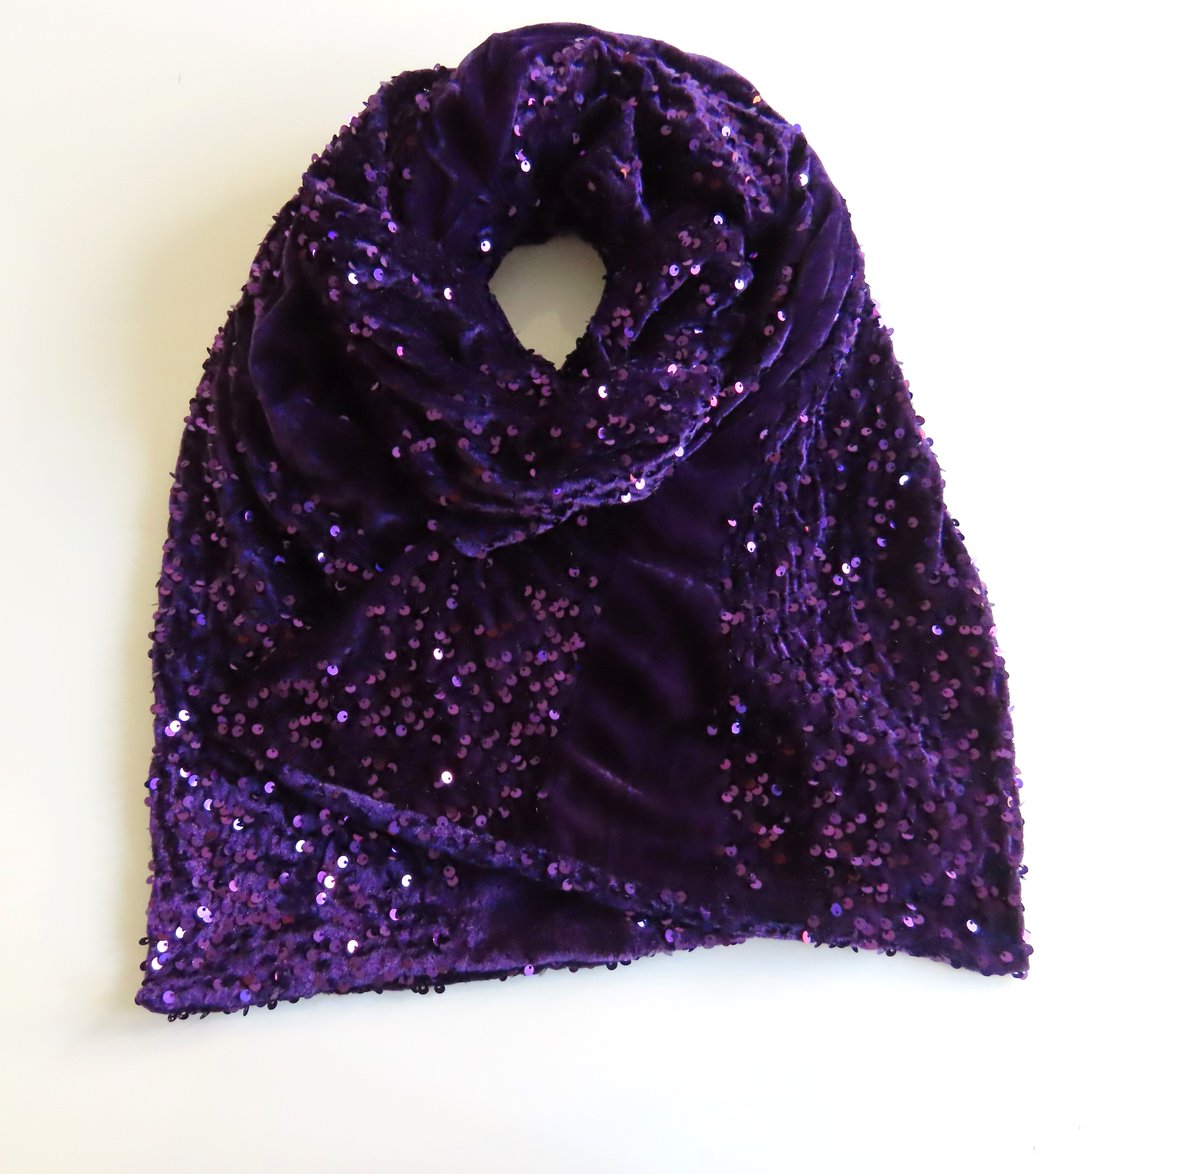 Just made this purple velvet sequin scarf - perfect addition for a scarf lovers wardrobe. 
#UKCraftersHour #ShopSmall #UKGiftHour #UKGiftAM #inbizhour #smallbusiness #etsygifts #UKMakers #bizbubble #YourBizHour #etsyfinds #earlybiz #handmadehour